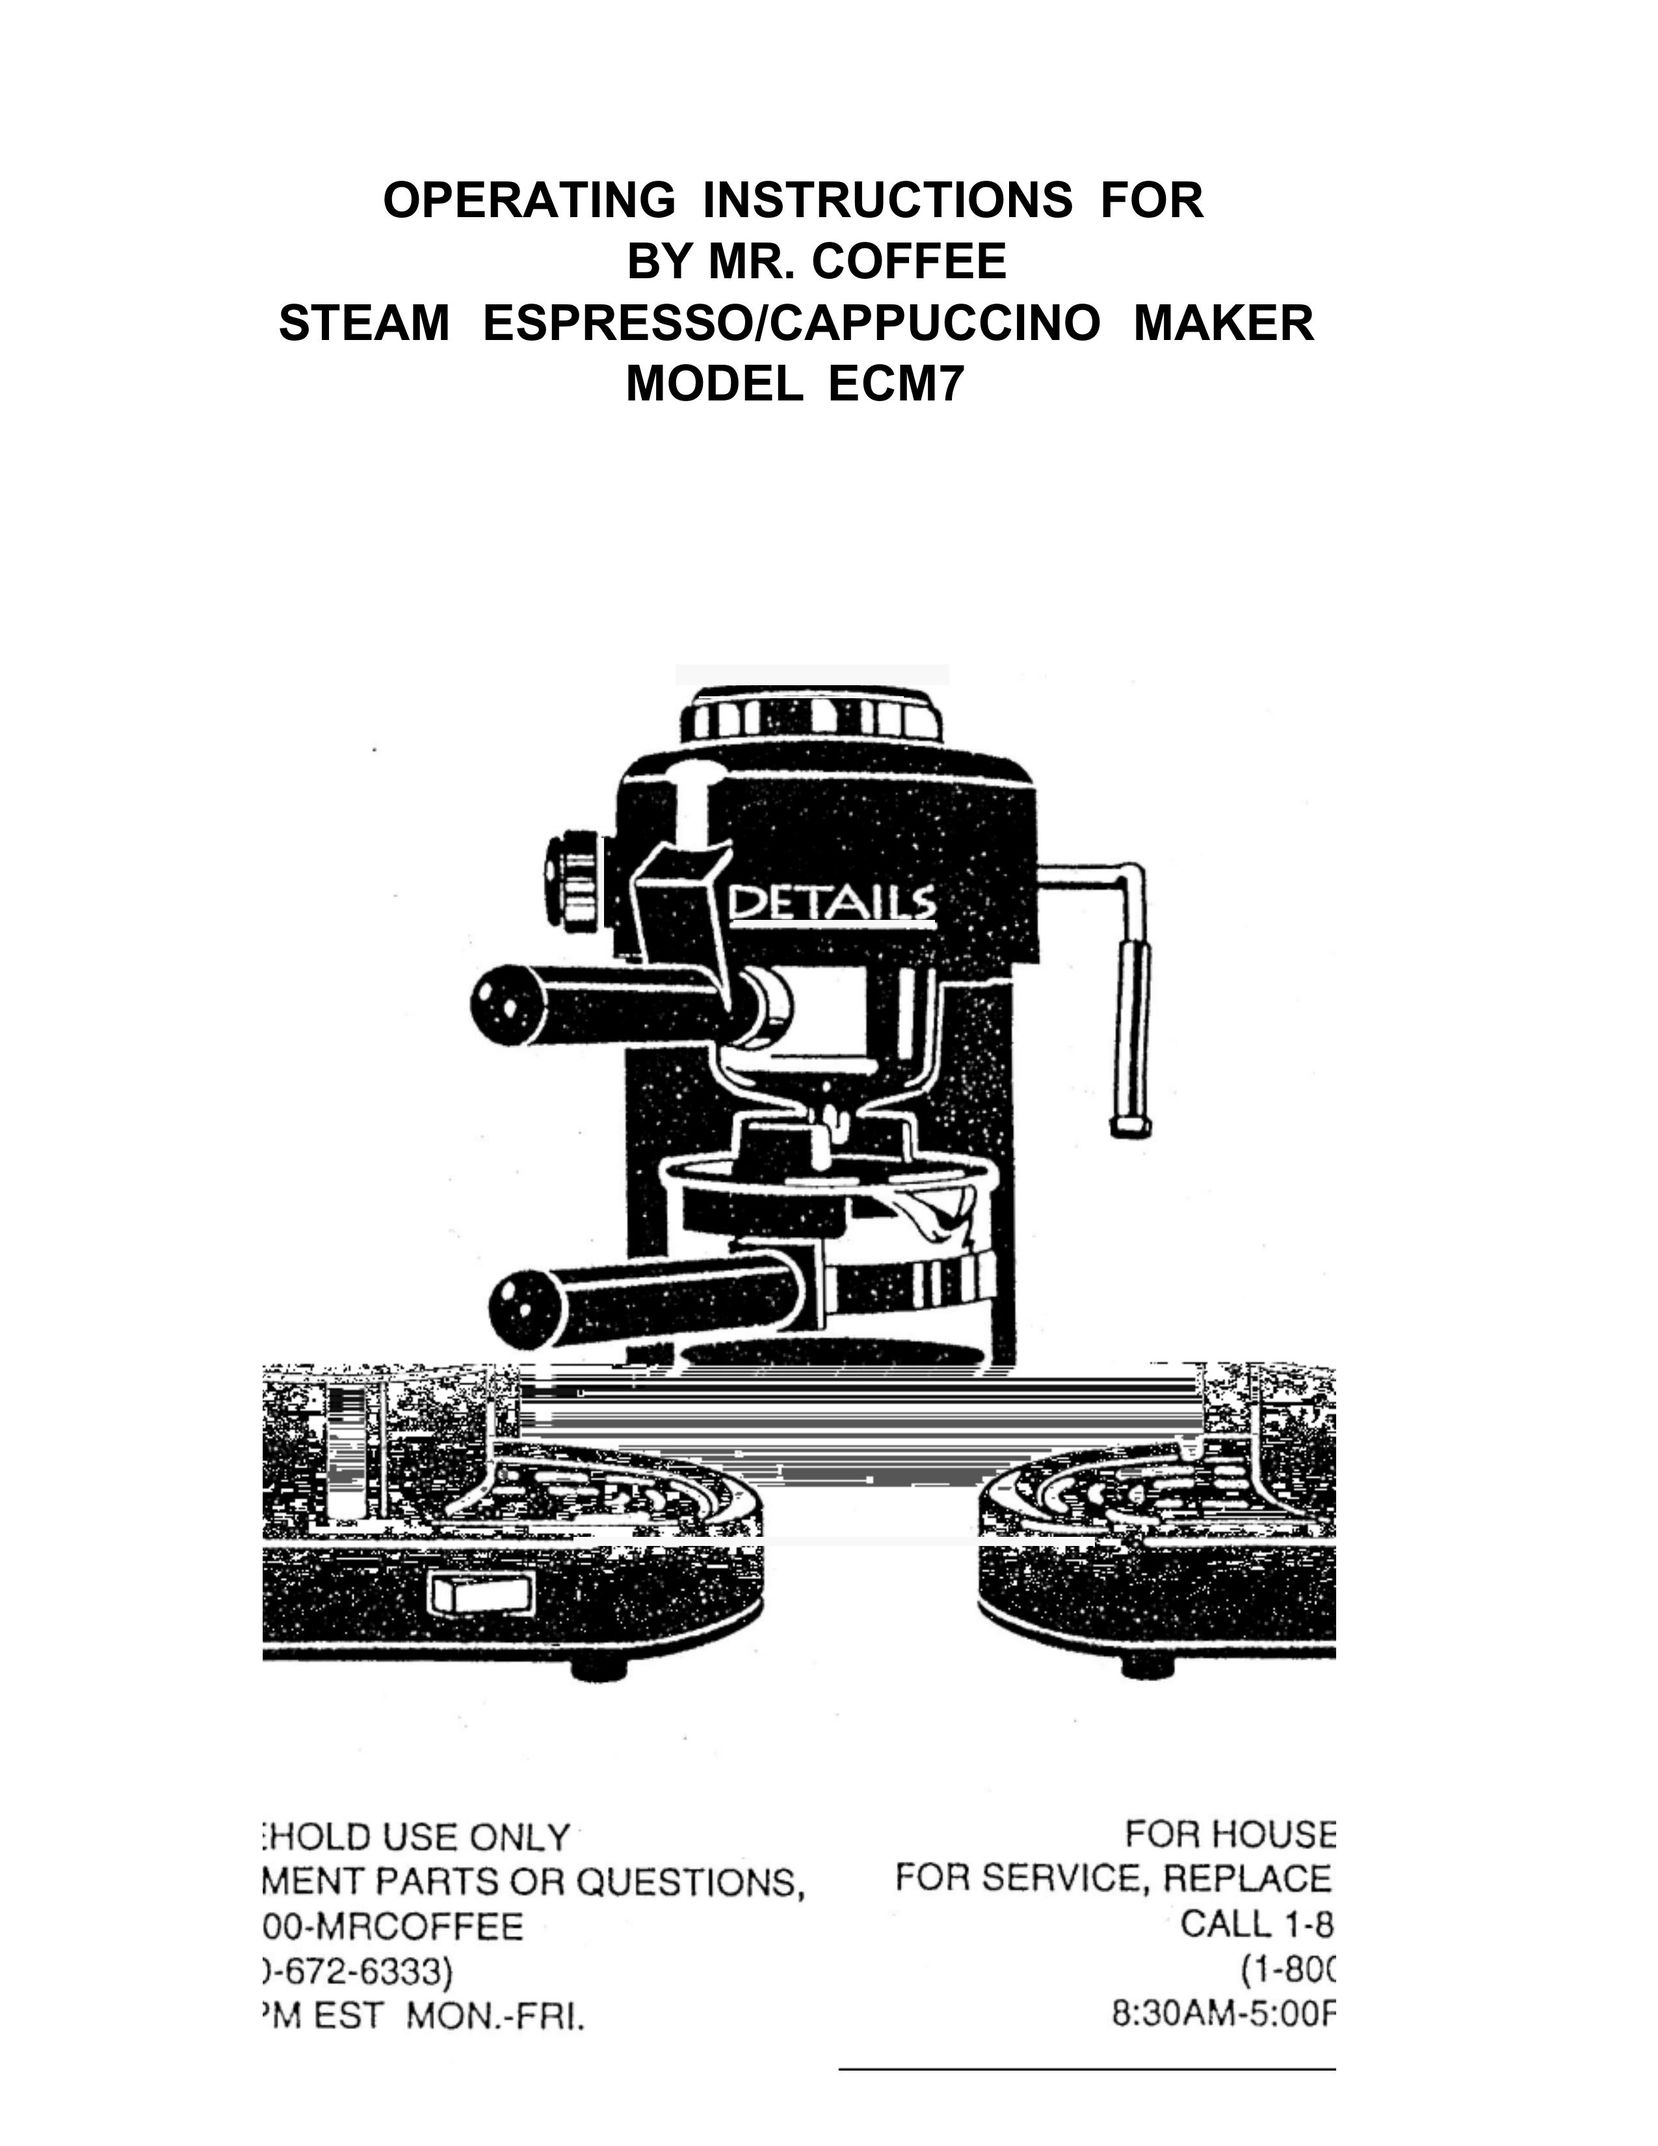 Mr. Coffee ECM7 Espresso Maker User Manual